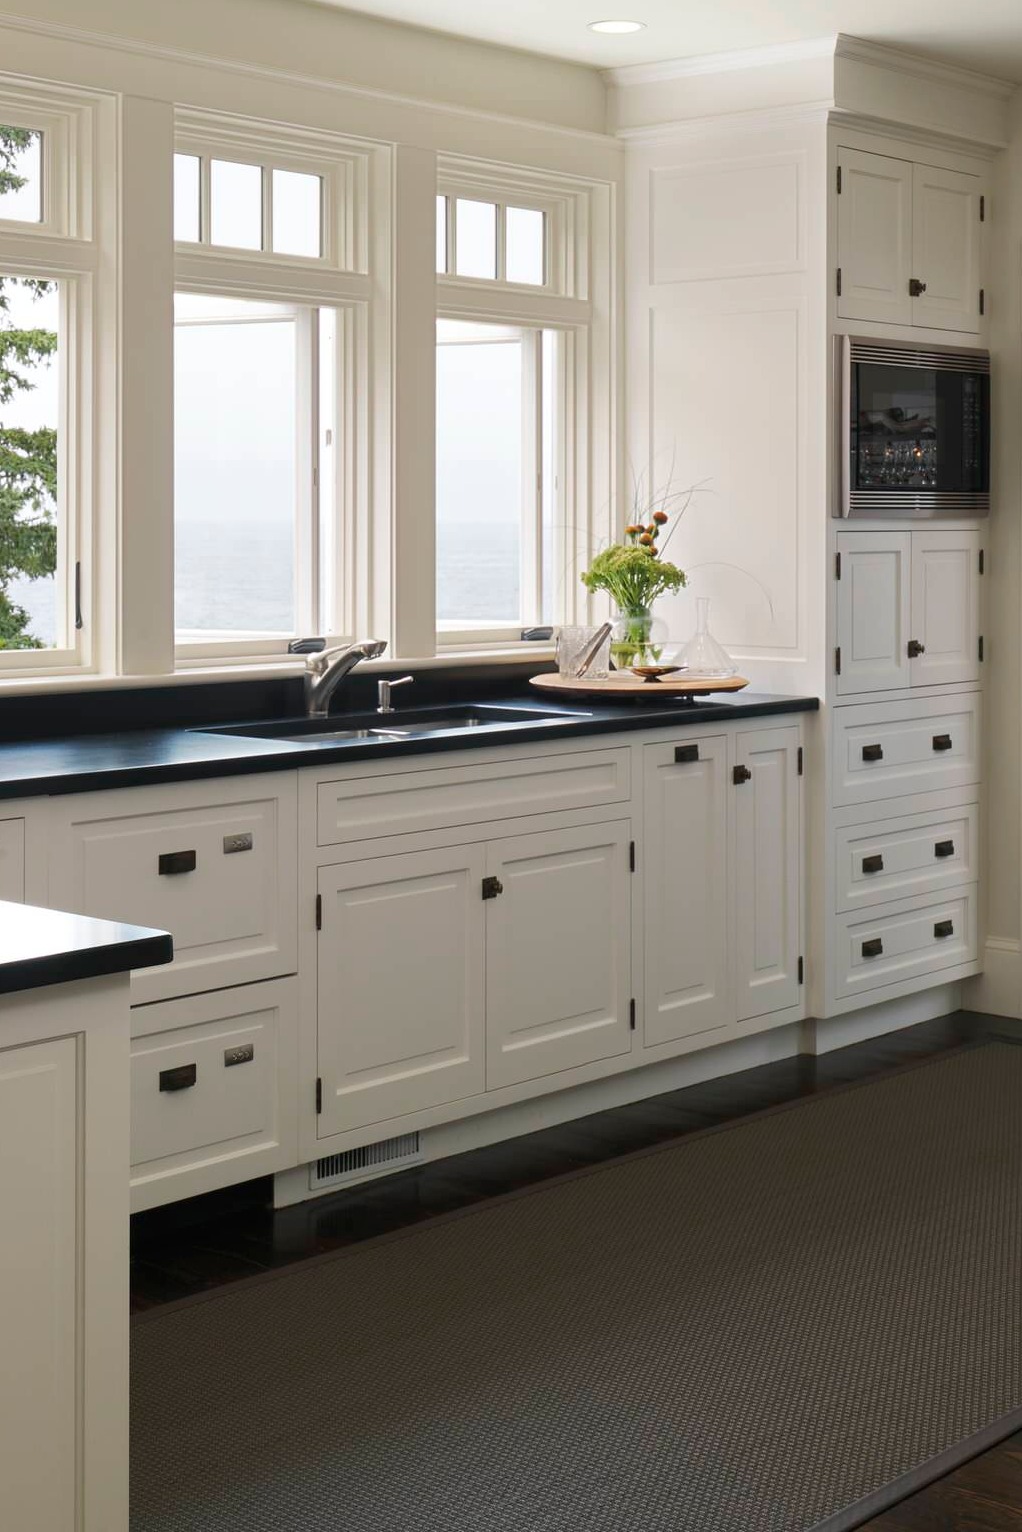 Honed Black Granite Counters White Cabinet Dark Hardwood Floor Handles